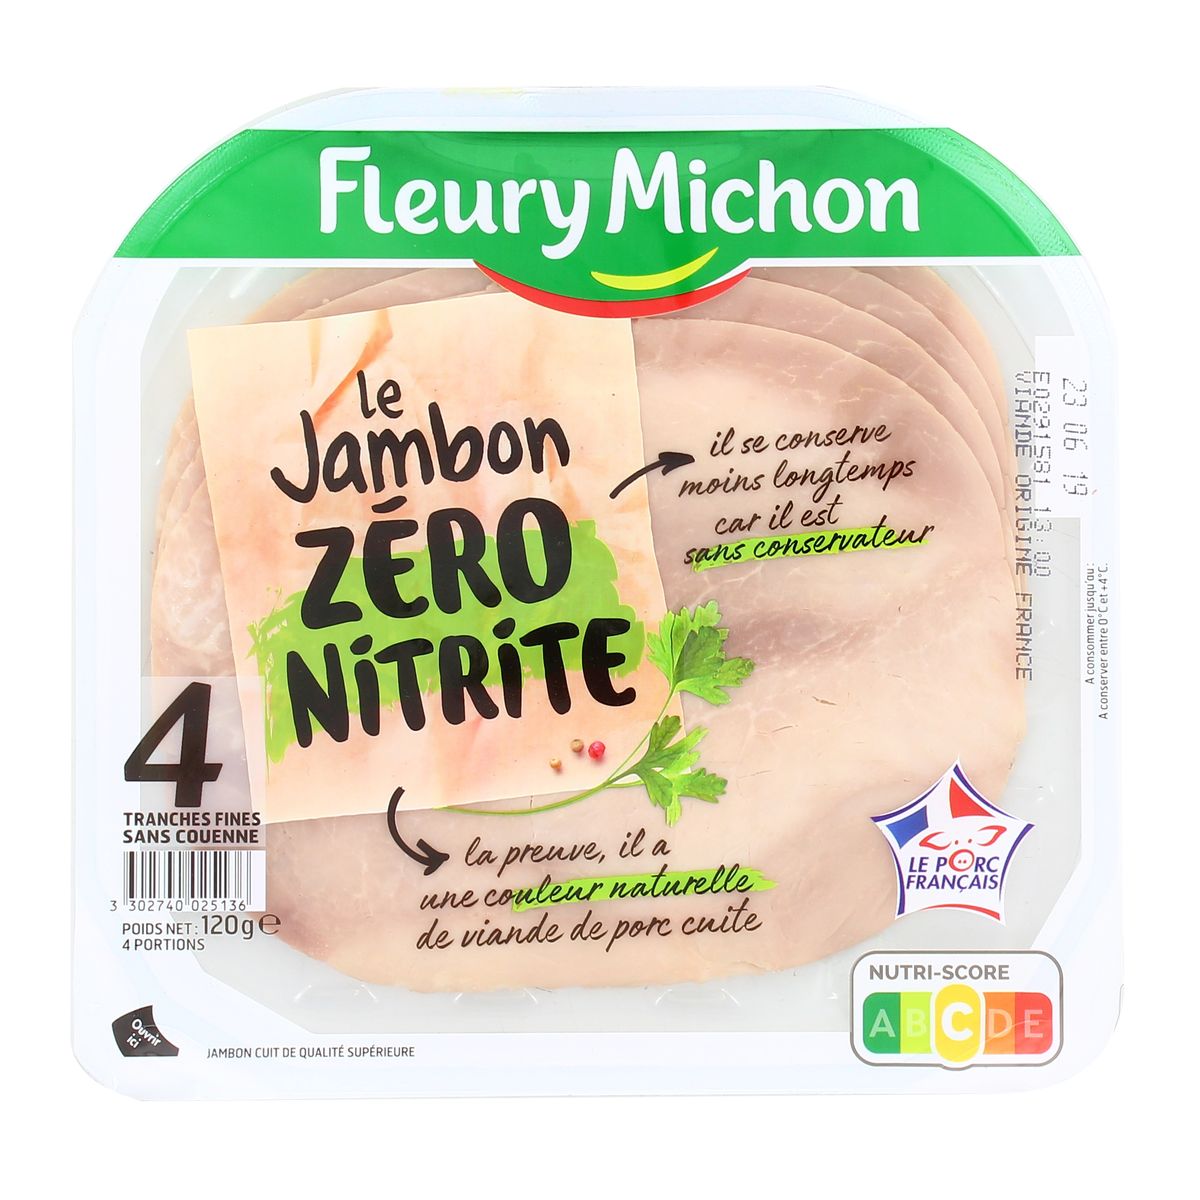 Le Jambon Zéro Nitrite